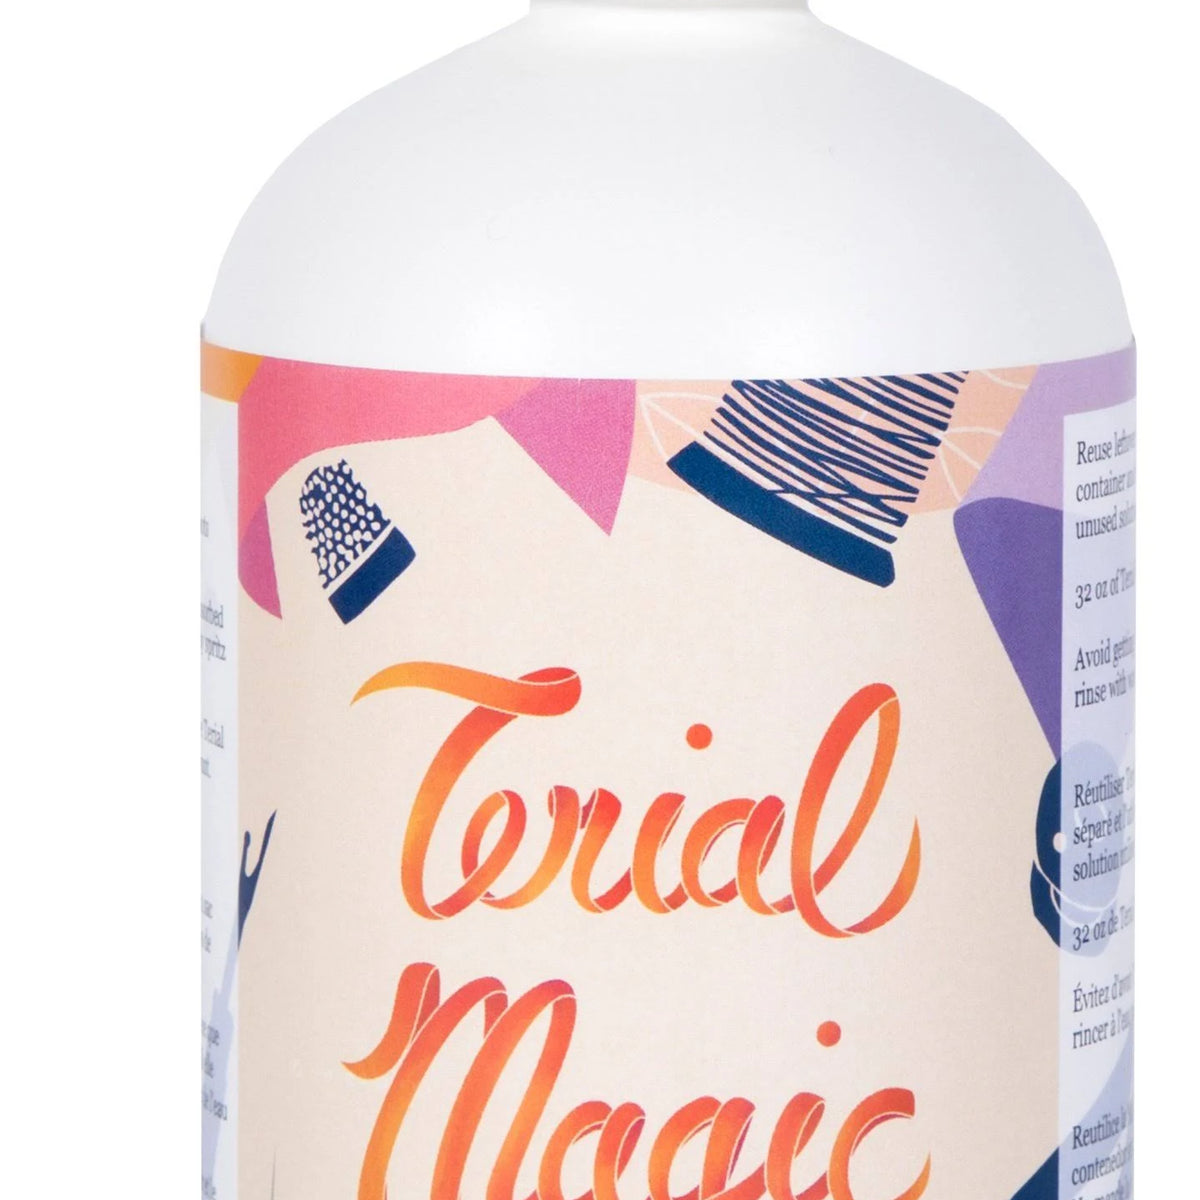 32 oz Terial Magic - Refill